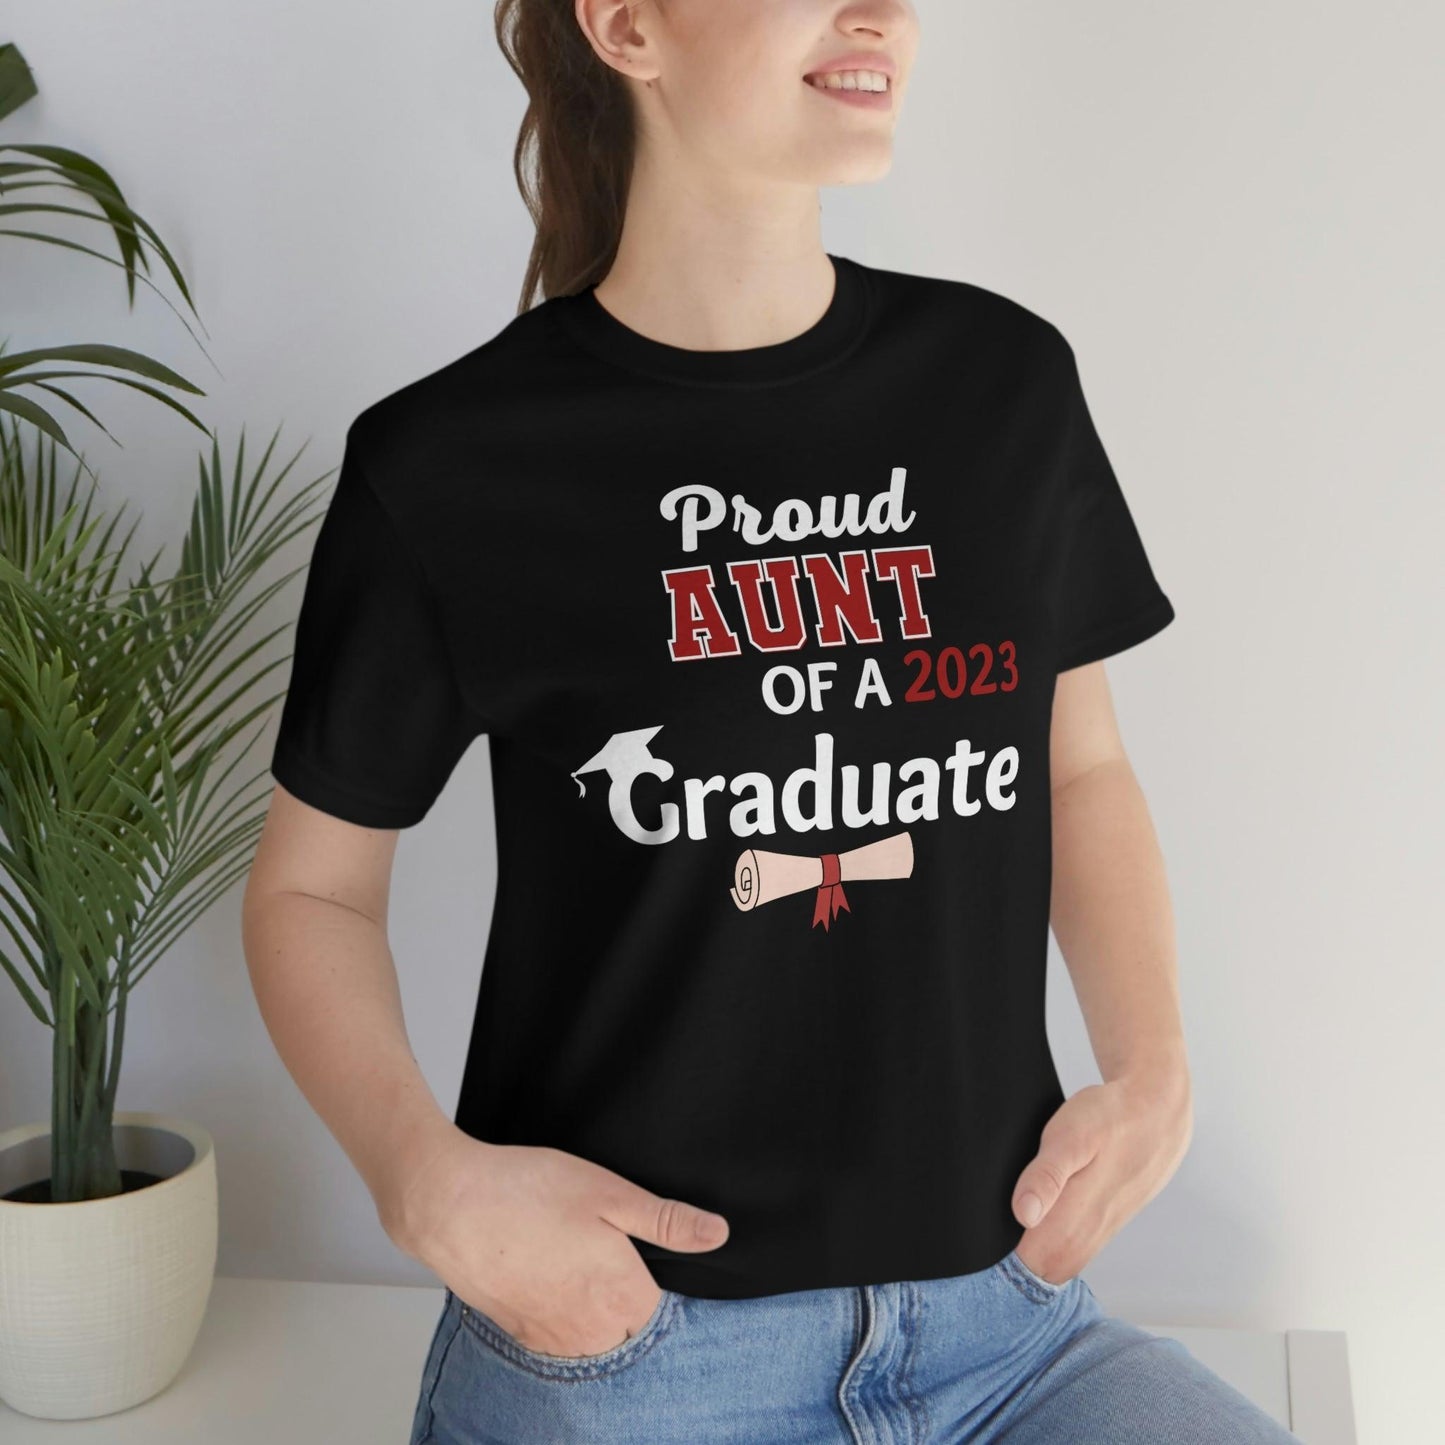 Proud Aunt of a Graduate shirt - Graduation shirt - Graduation gift